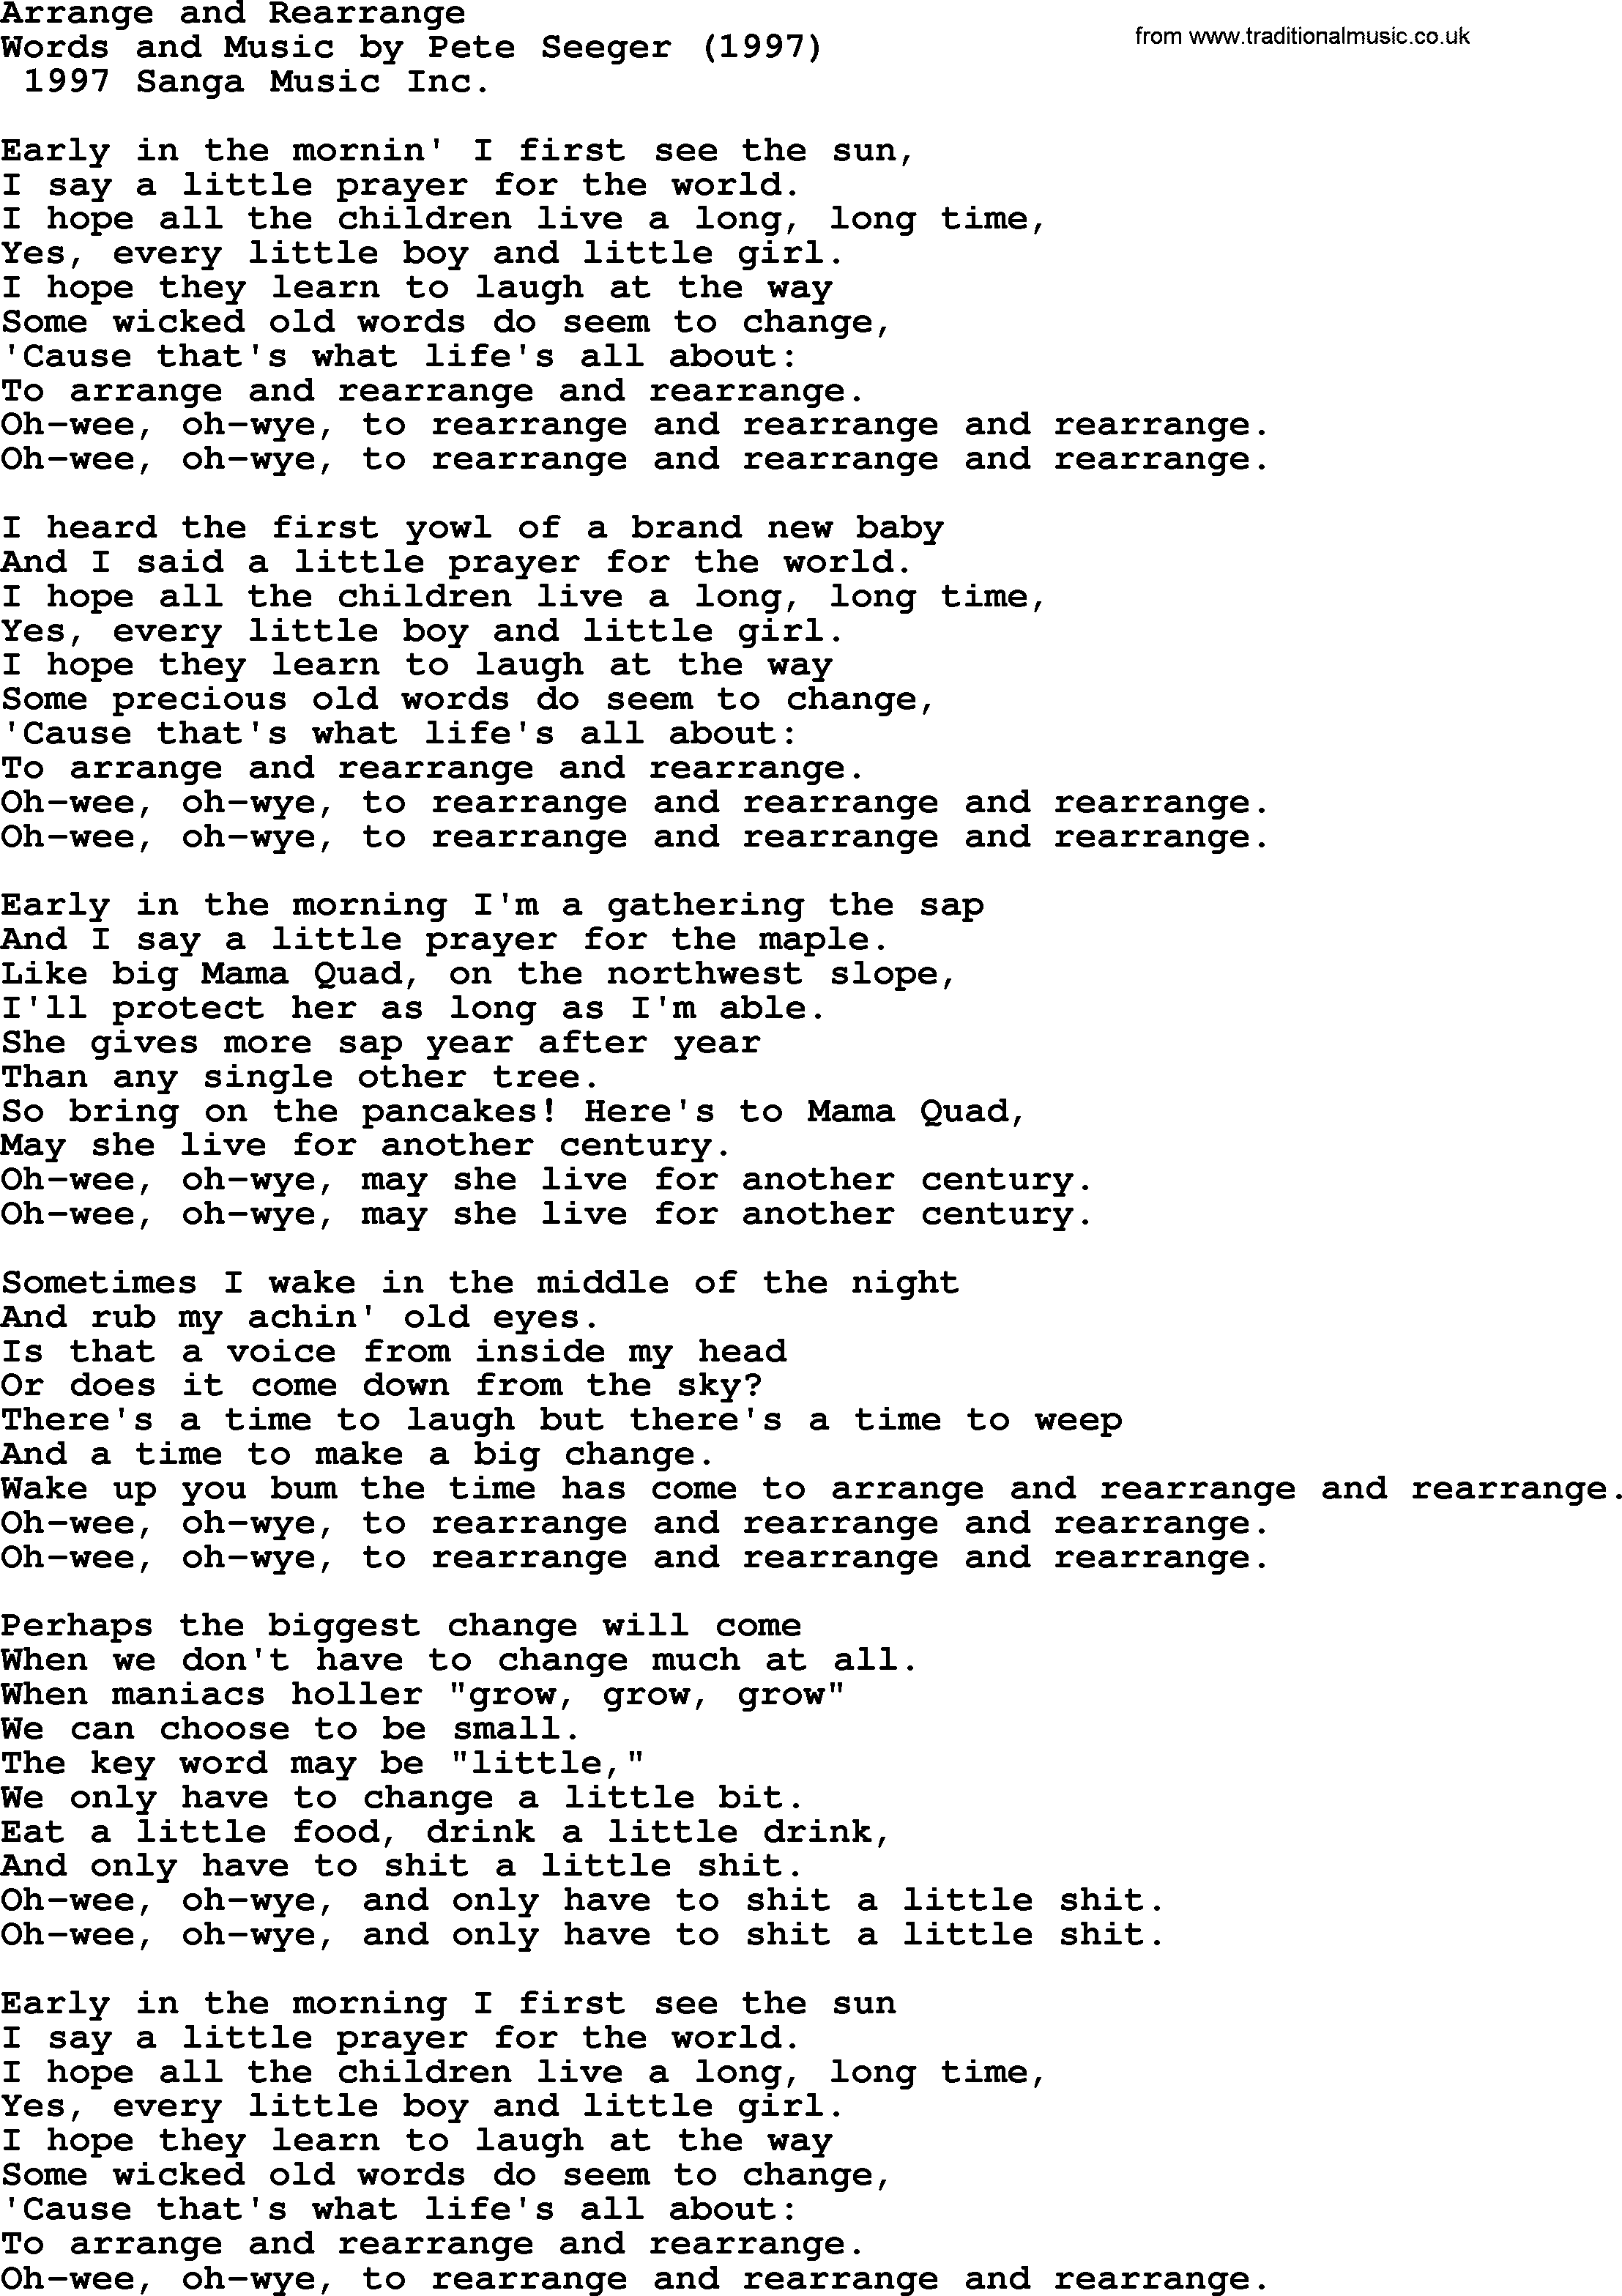 Pete Seeger song Arrange and Rearrange-Pete-Seeger.txt lyrics